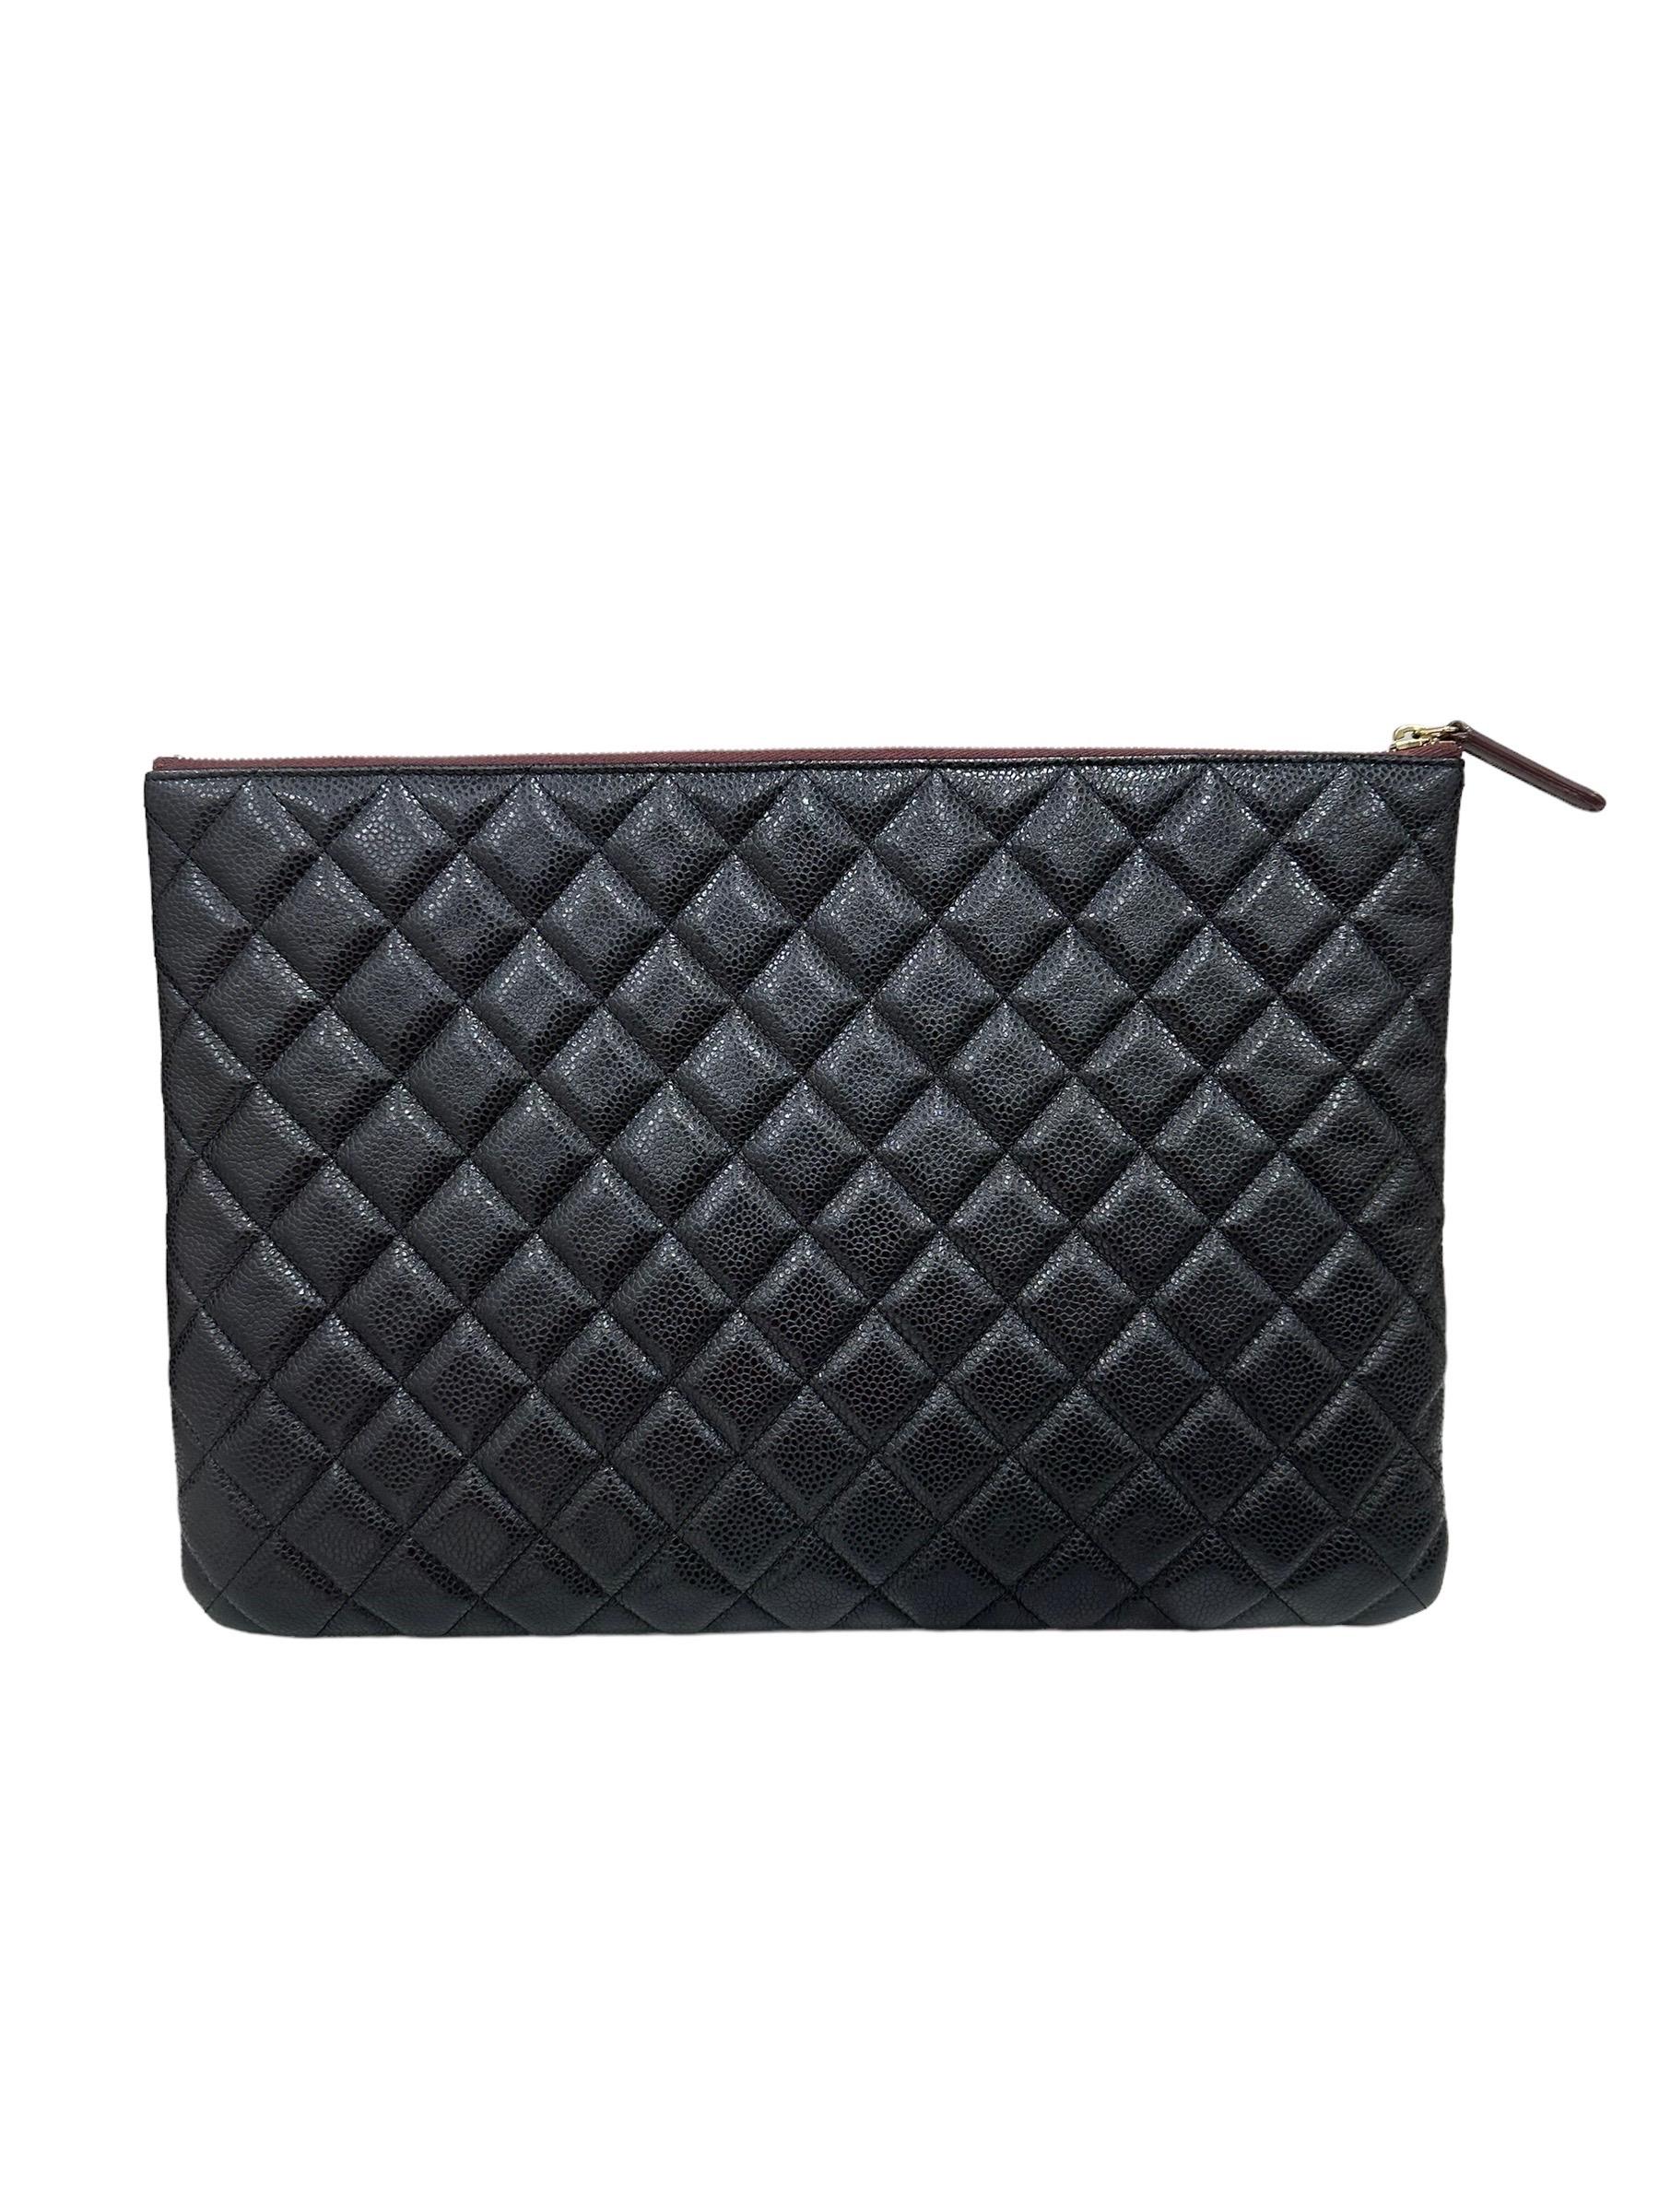 2016 Chanel Timeless Clutch Black Caviar Leather  1